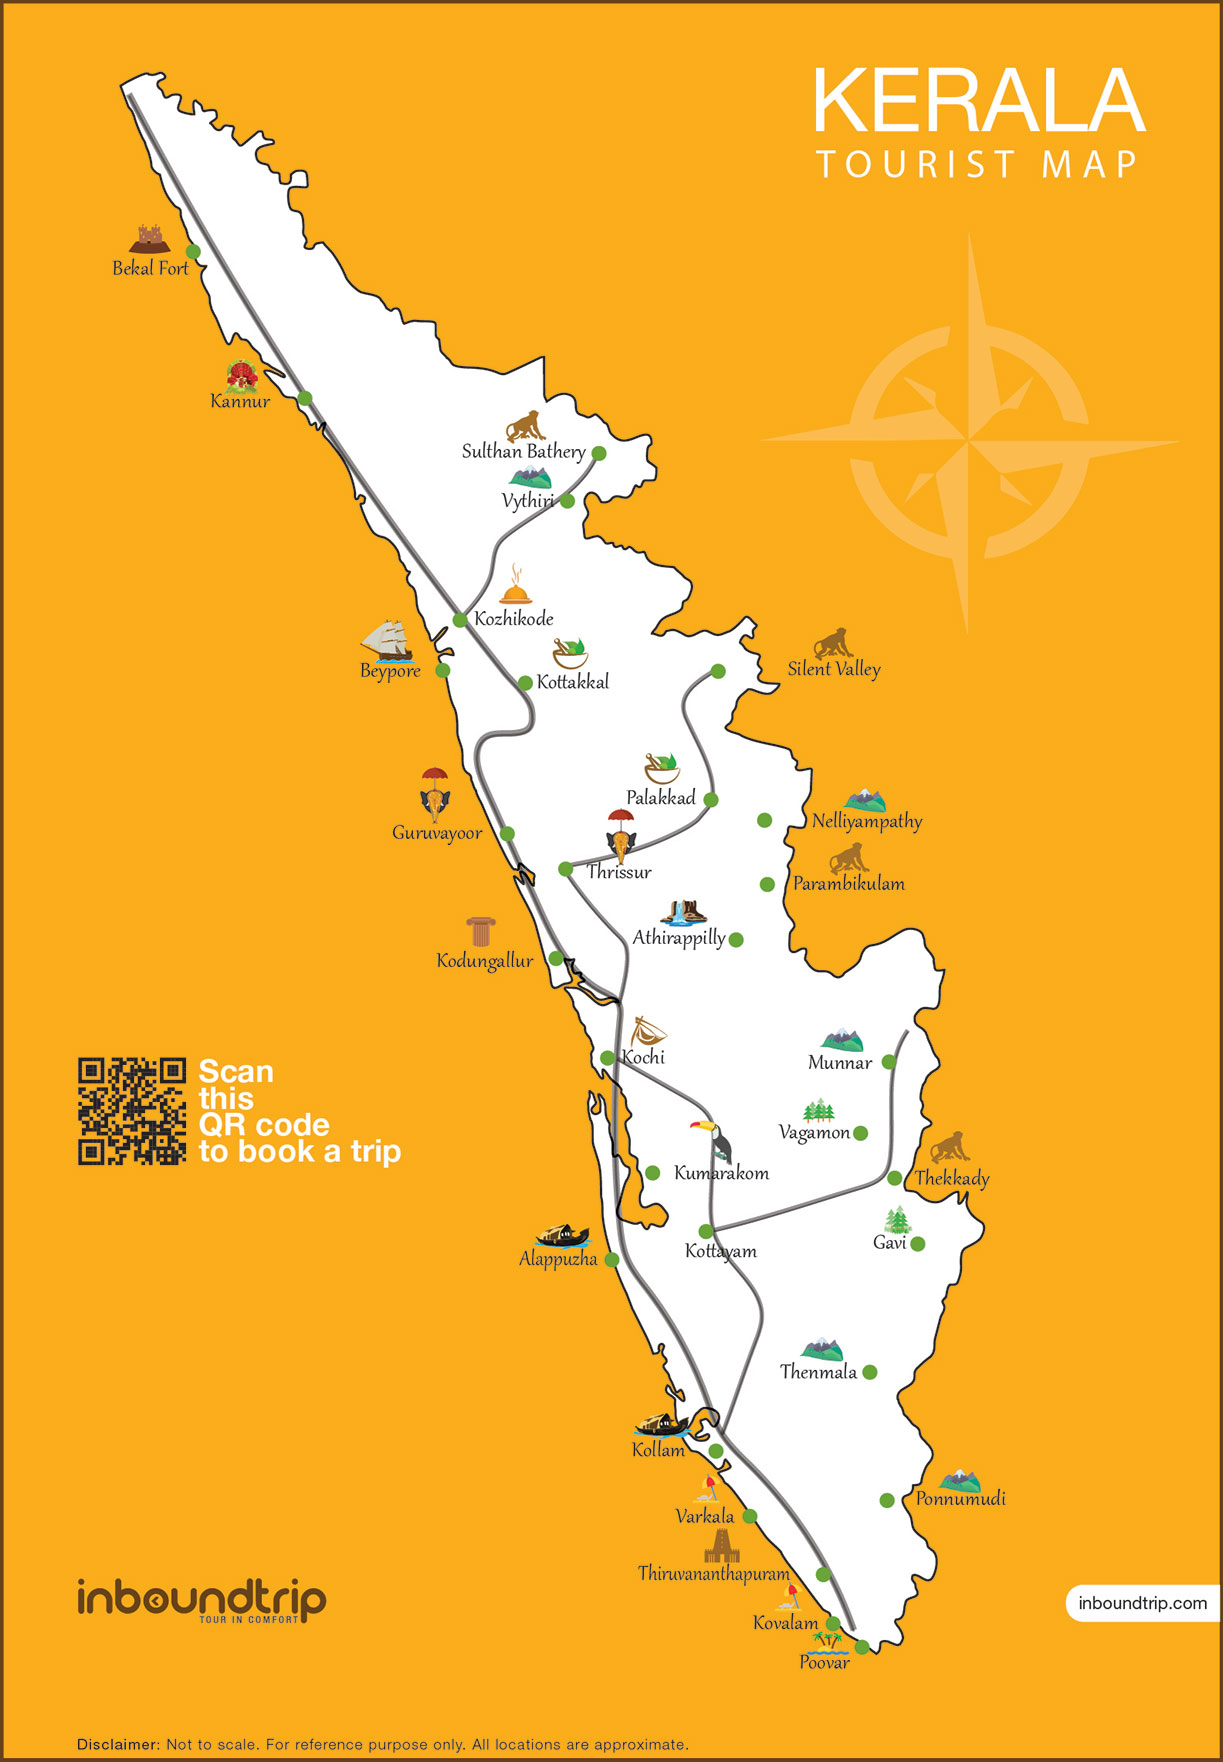 tourist map of tamilnadu and kerala